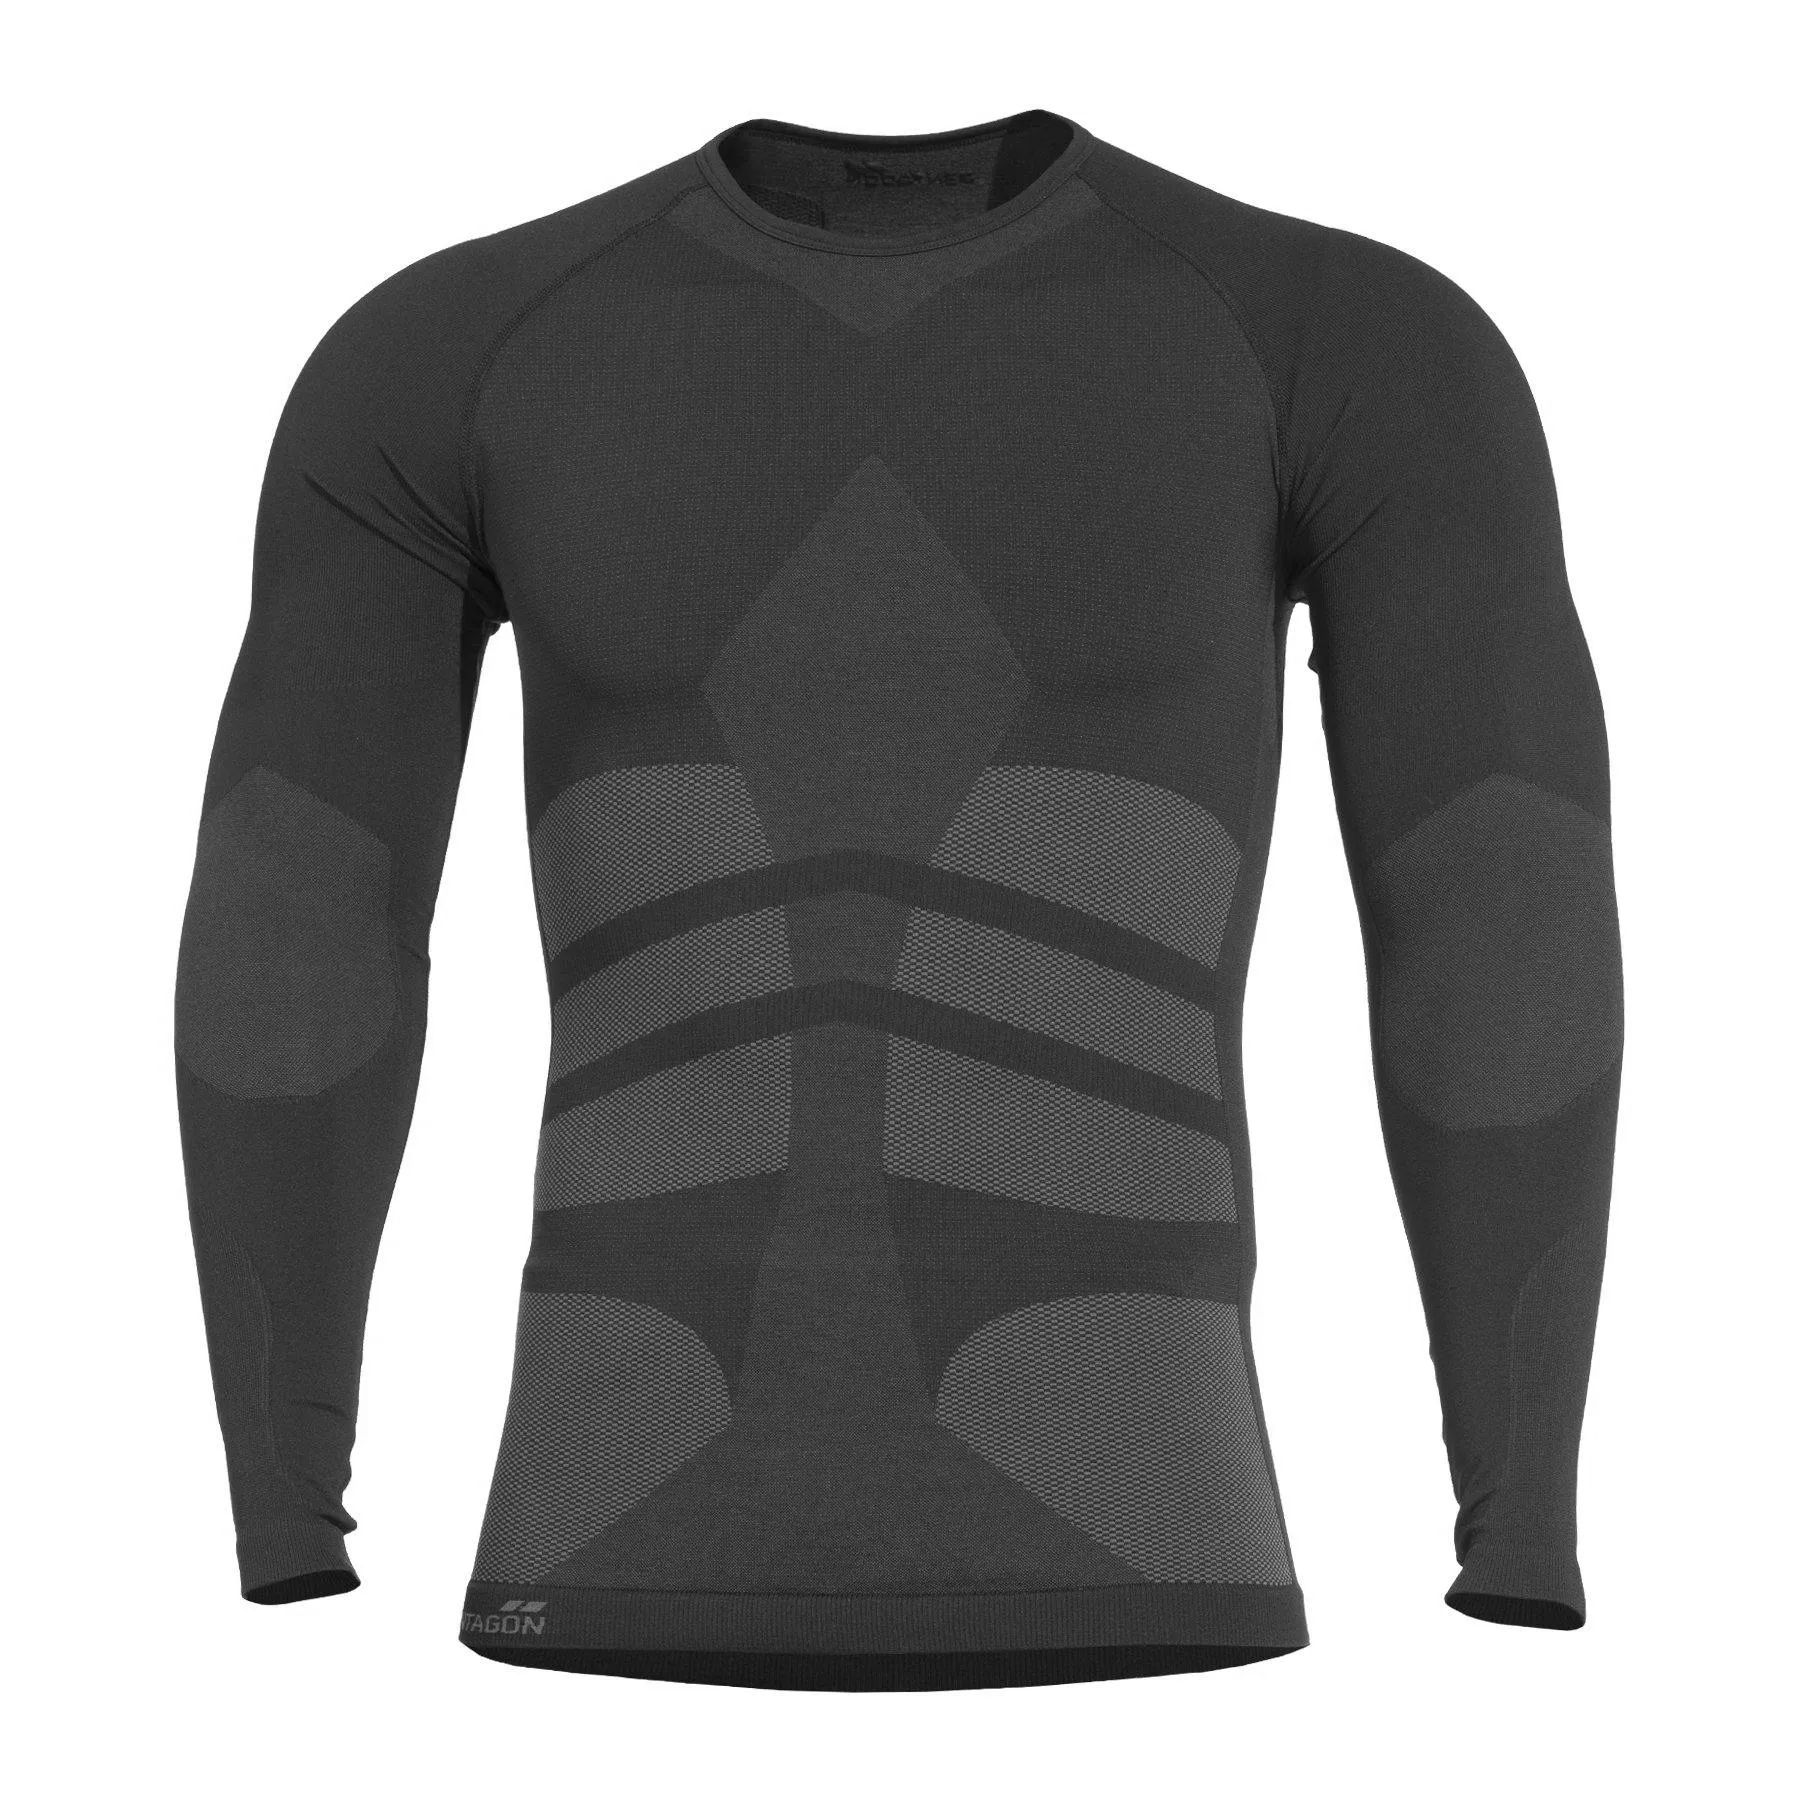 Pentagon - Plexis Shirt (Black)